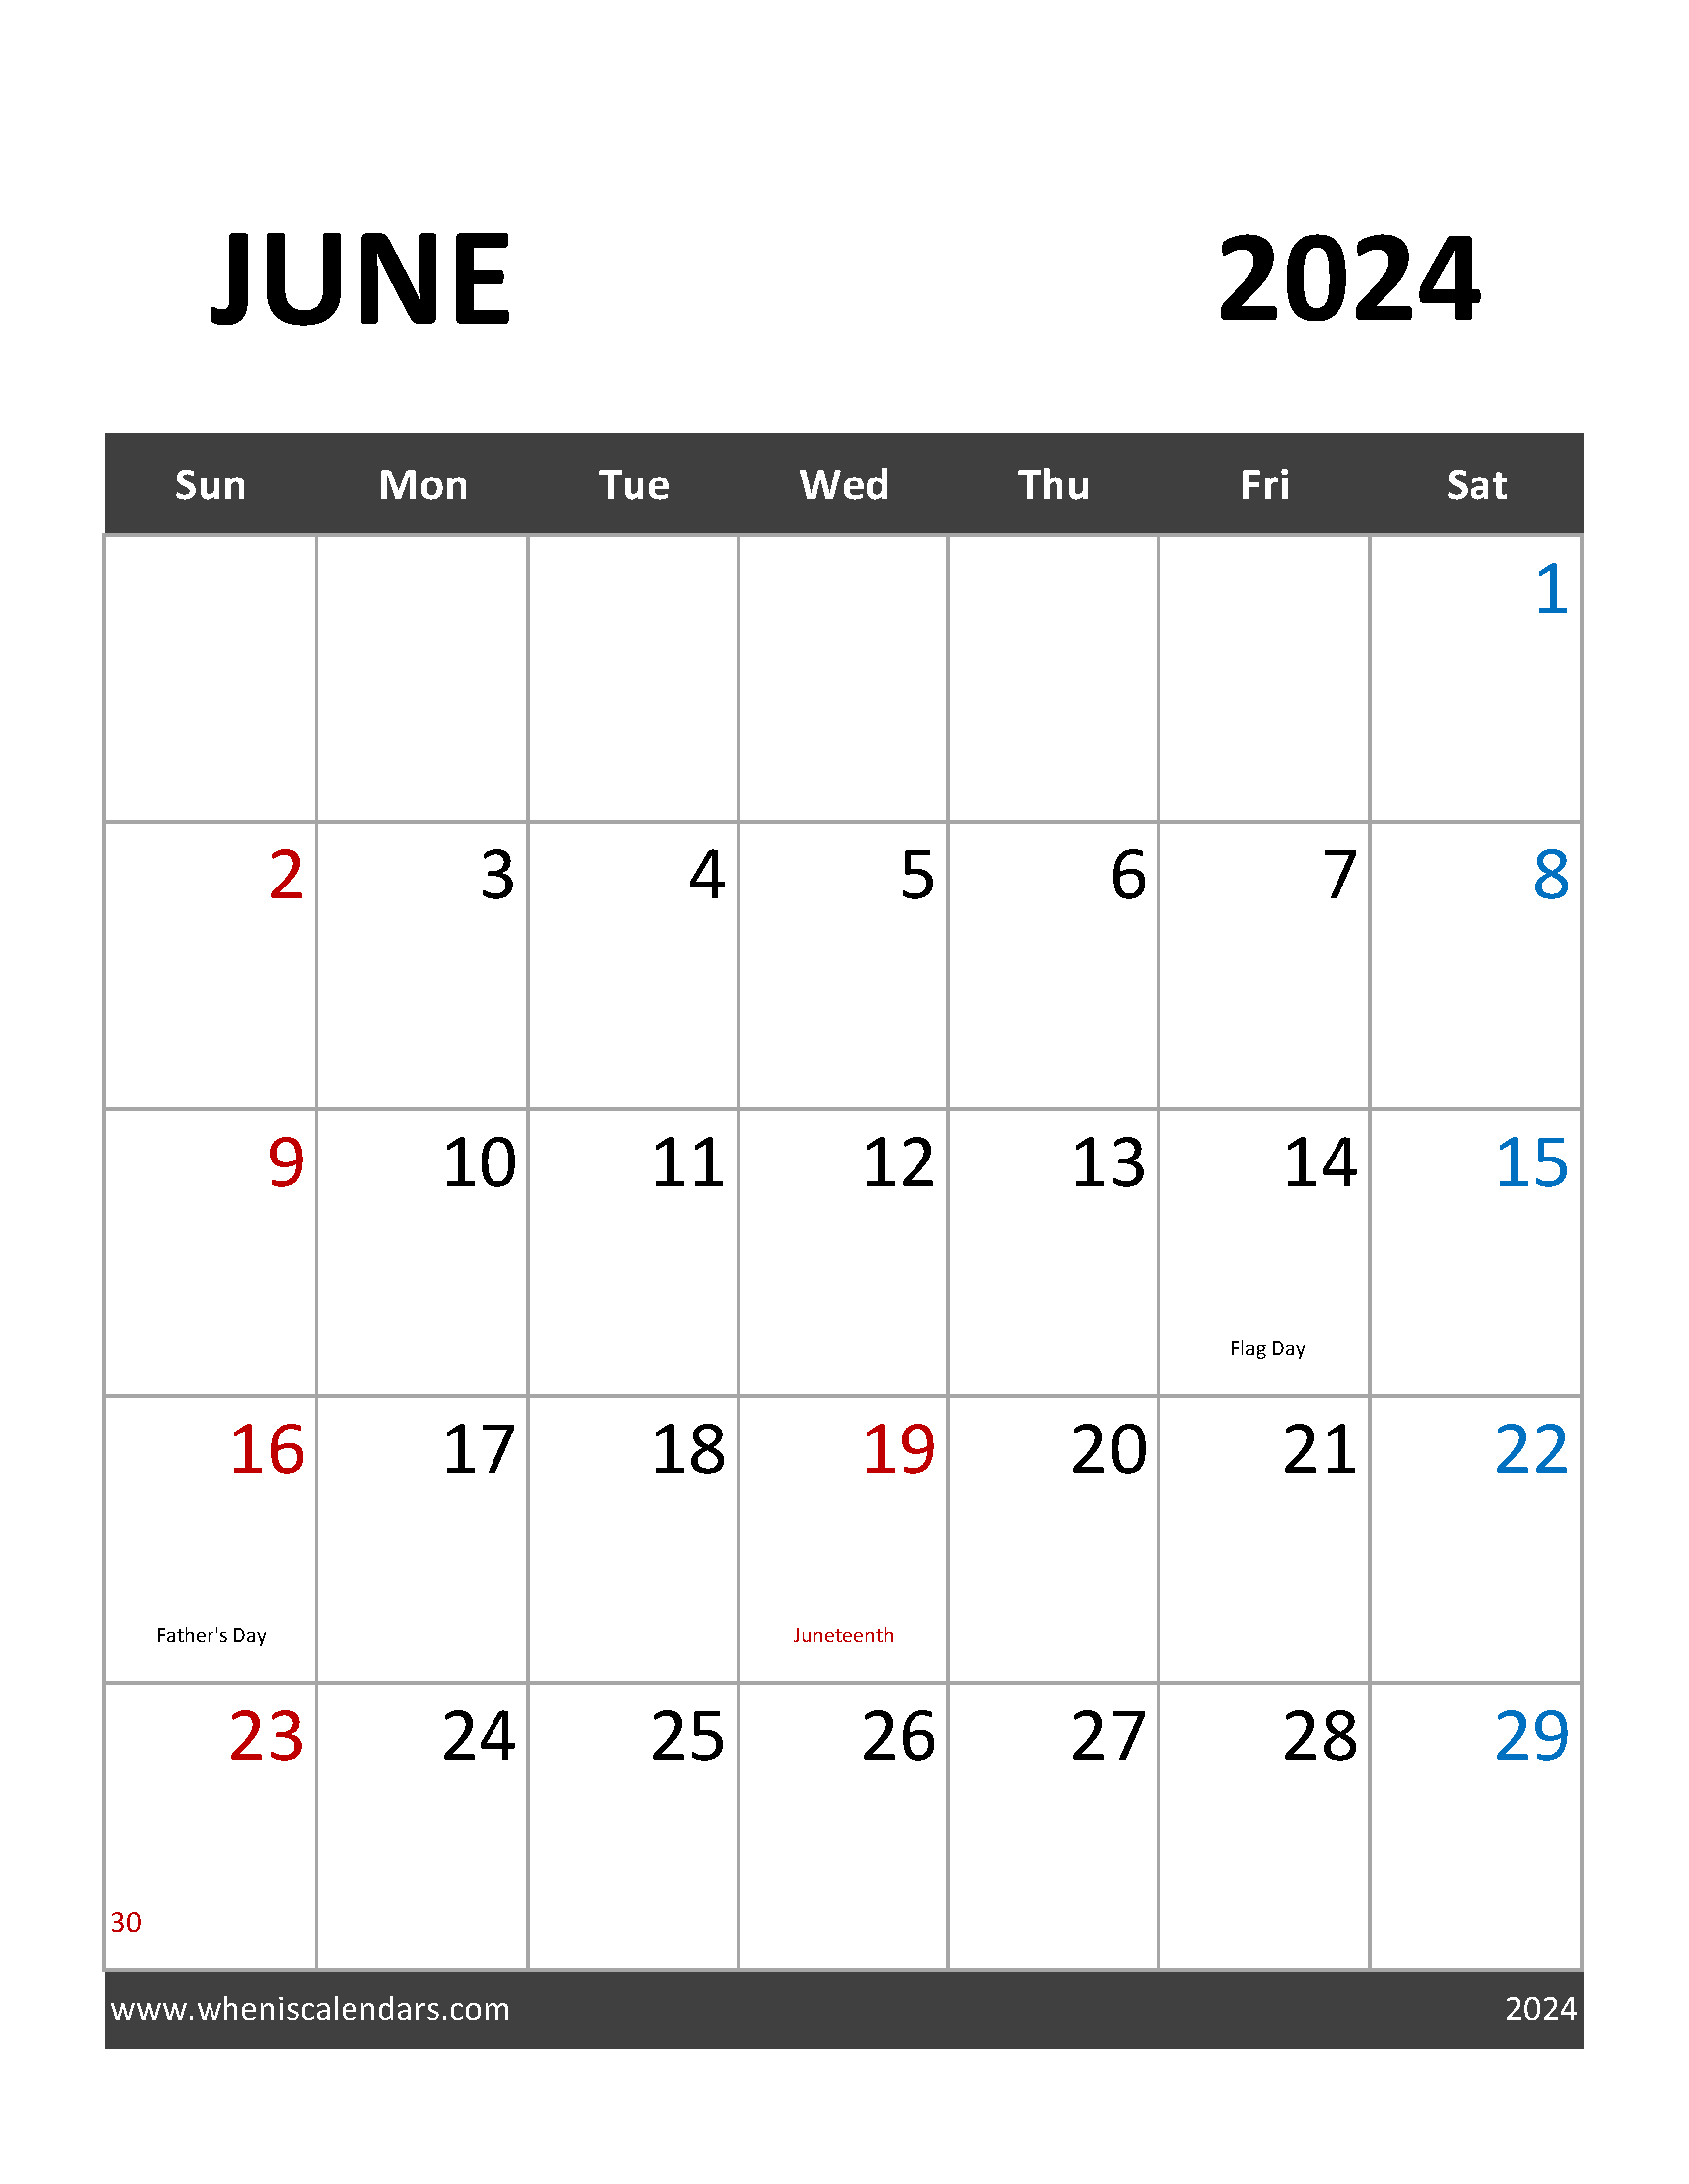 June 2024 Holidays Calendar